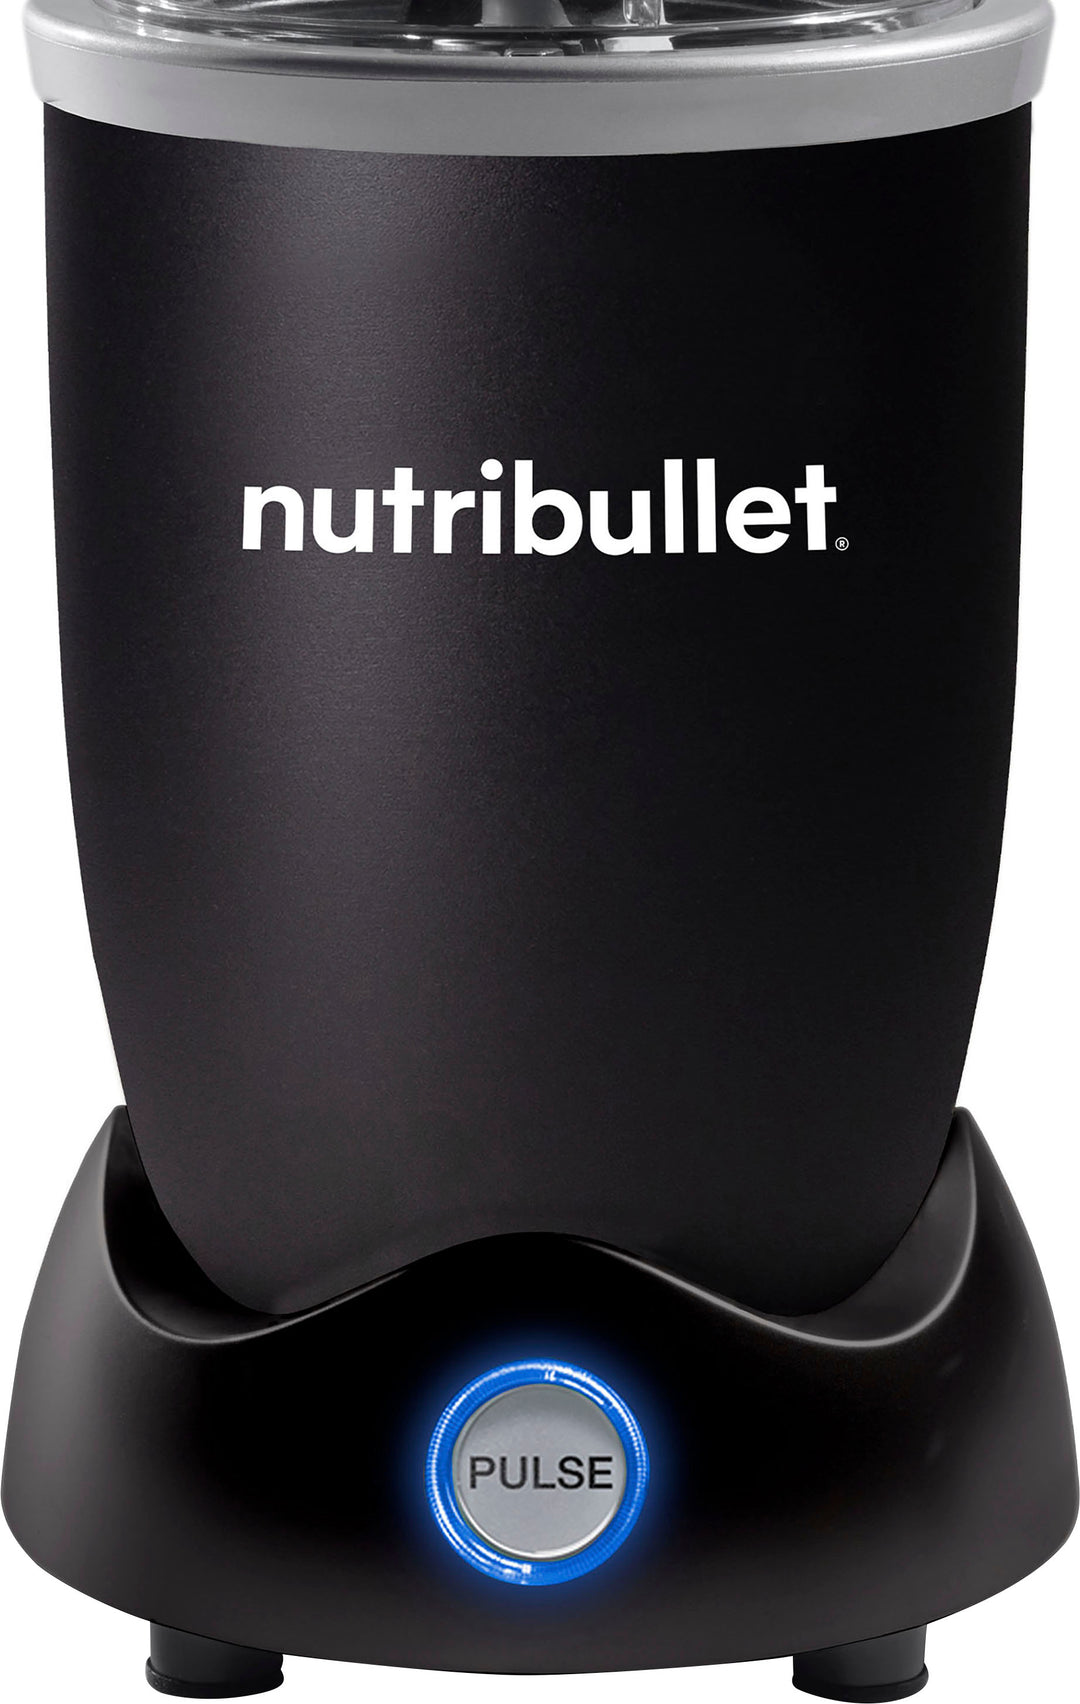 nutribullet Pro+ 1200 Watt Personal Blender with Pulse Function N12-1001 - Matte Black_6